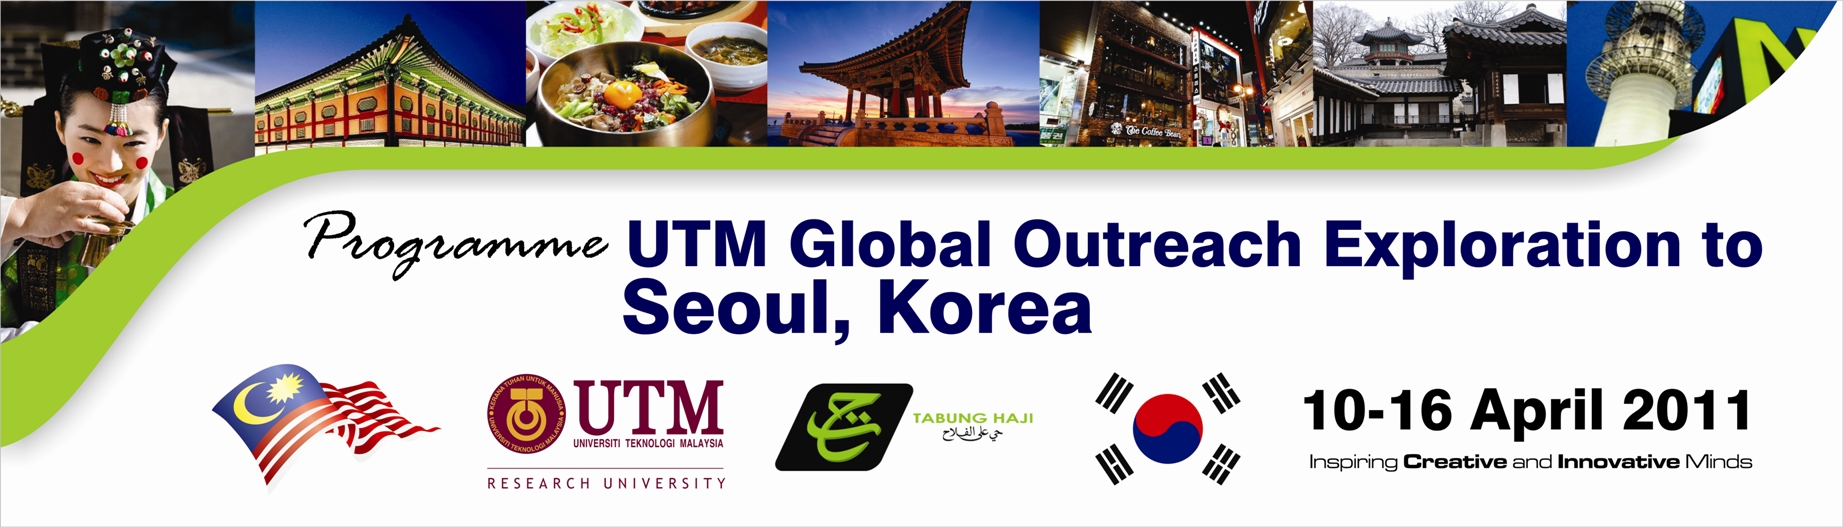 Programme UTM Global Outreach Exploration to Seoul Korea